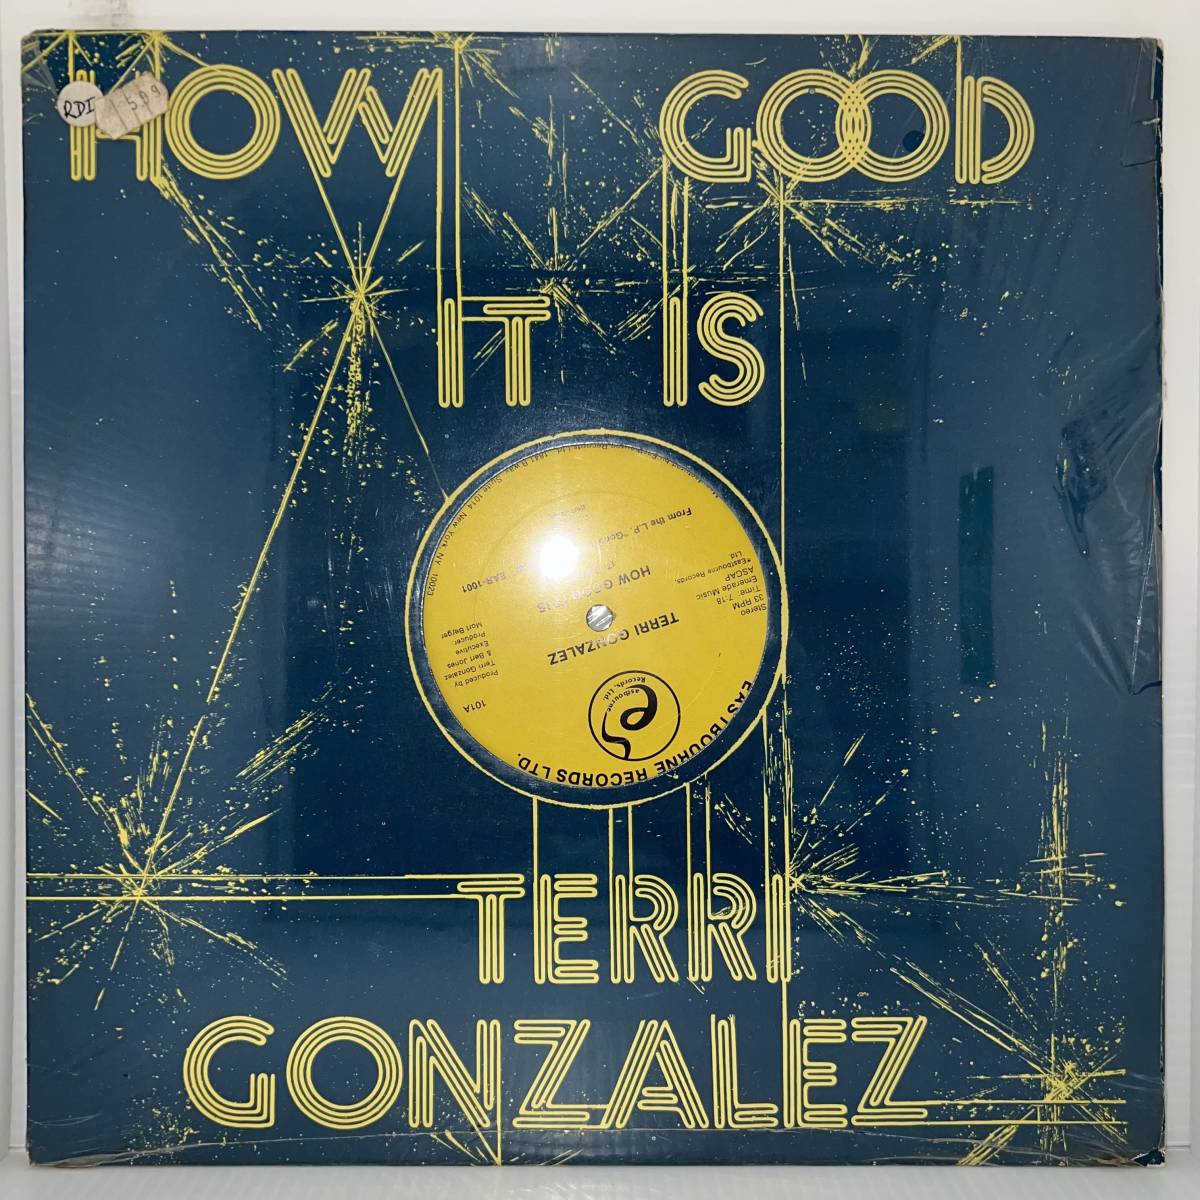 Funk Soul Disco 12 - Terri Gonzalez - How Good It Is - Eastbourne - シールド 未開封